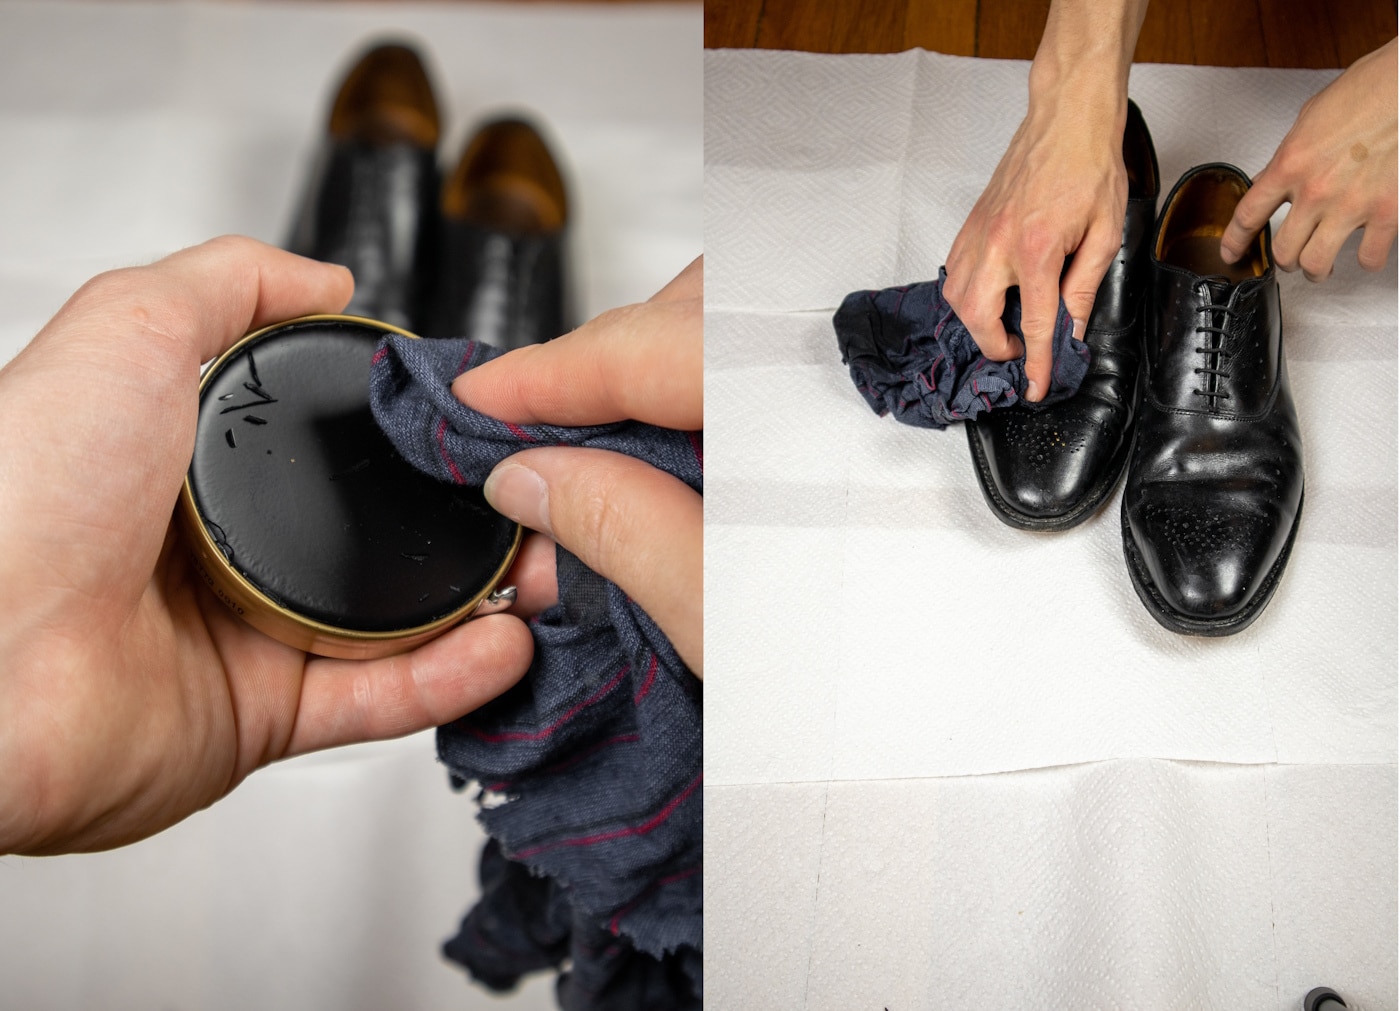 Applying Polish to Black Dress Shoes